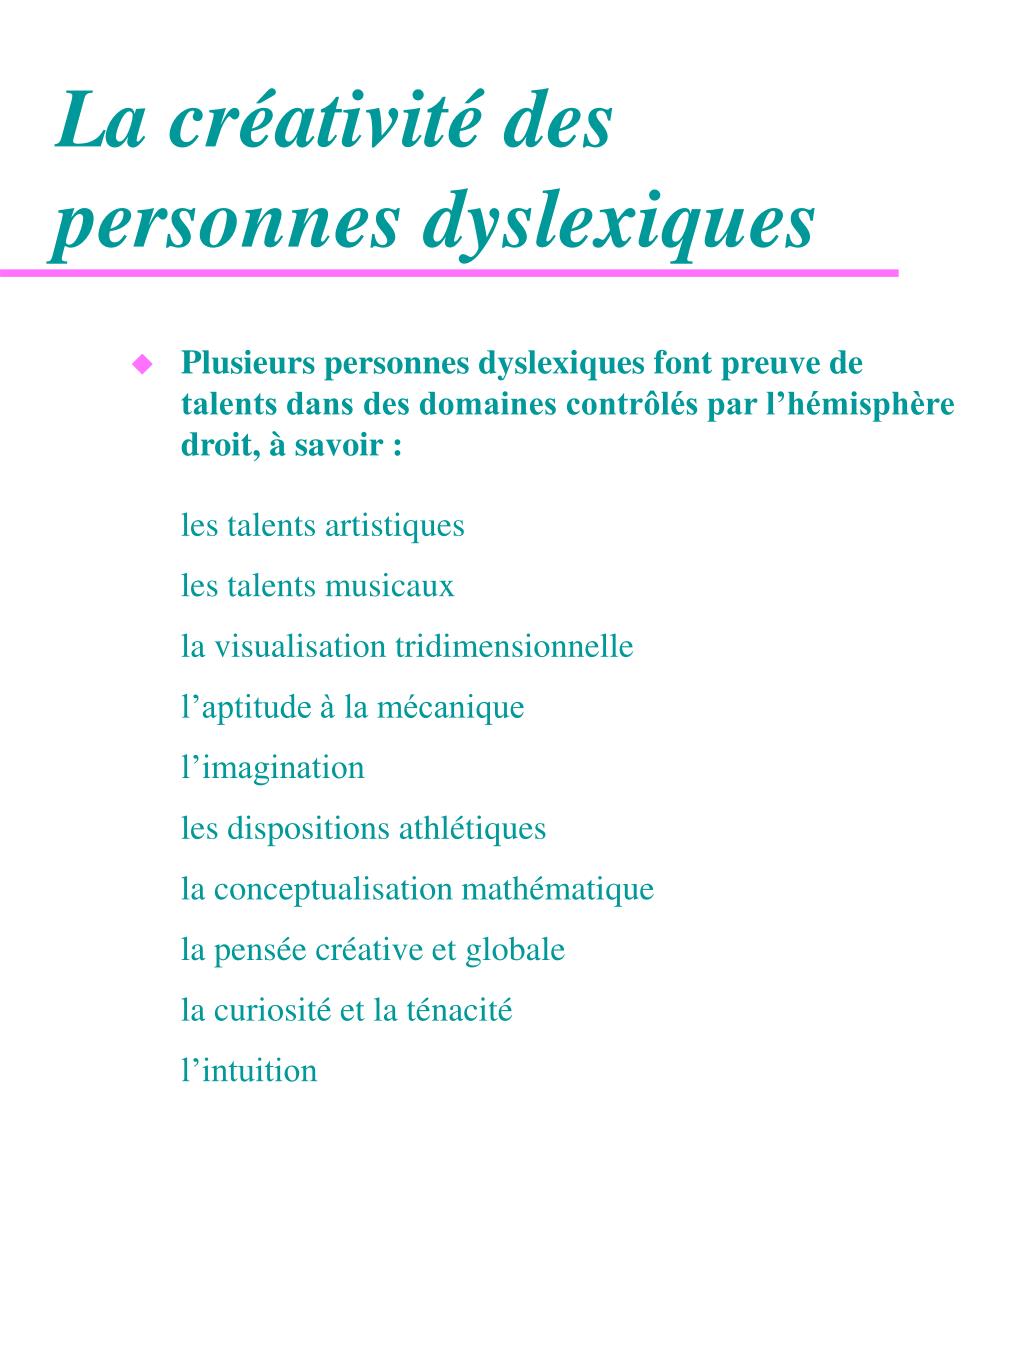 PPT - LA DYSLEXIE PowerPoint Presentation, free download - ID:3797998